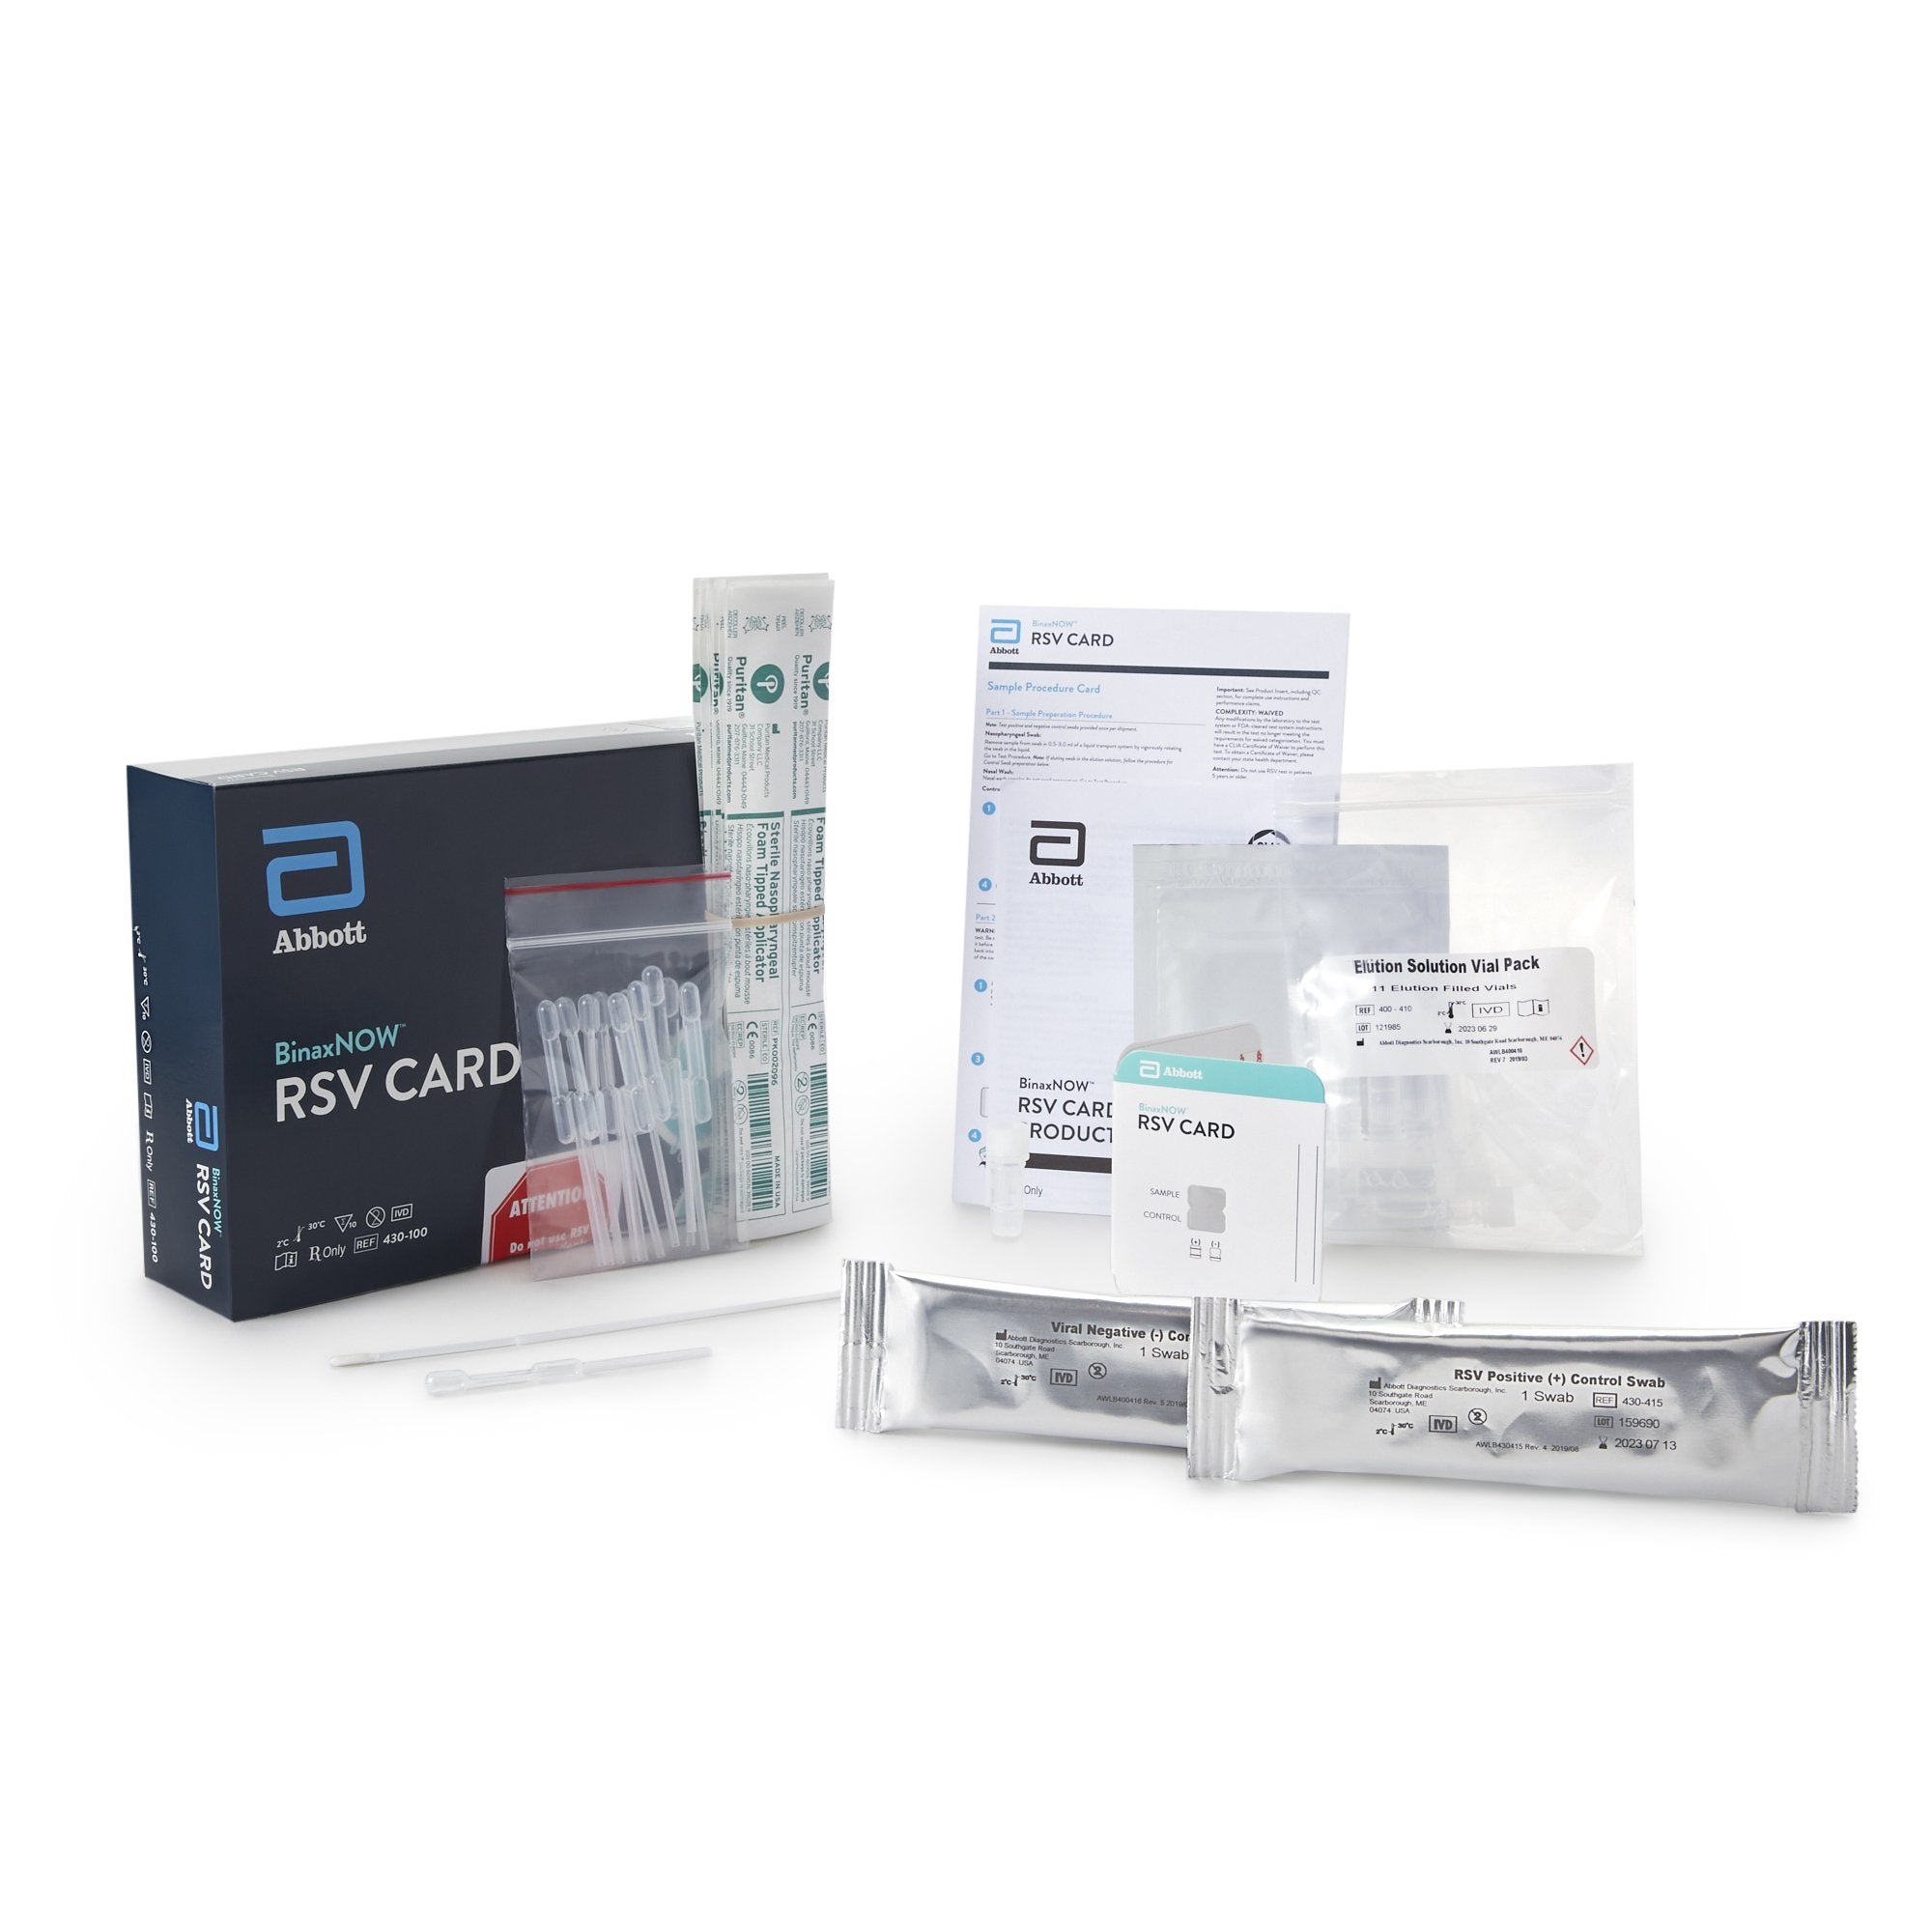 Respiratory Test Kit BinaxNOW Infectious Disease Immunoassay Respiratory Syncytial Virus Test (RSV) Nasopharyngeal Swab / Nasal Wash Sample 10 Tests CLIA Waived